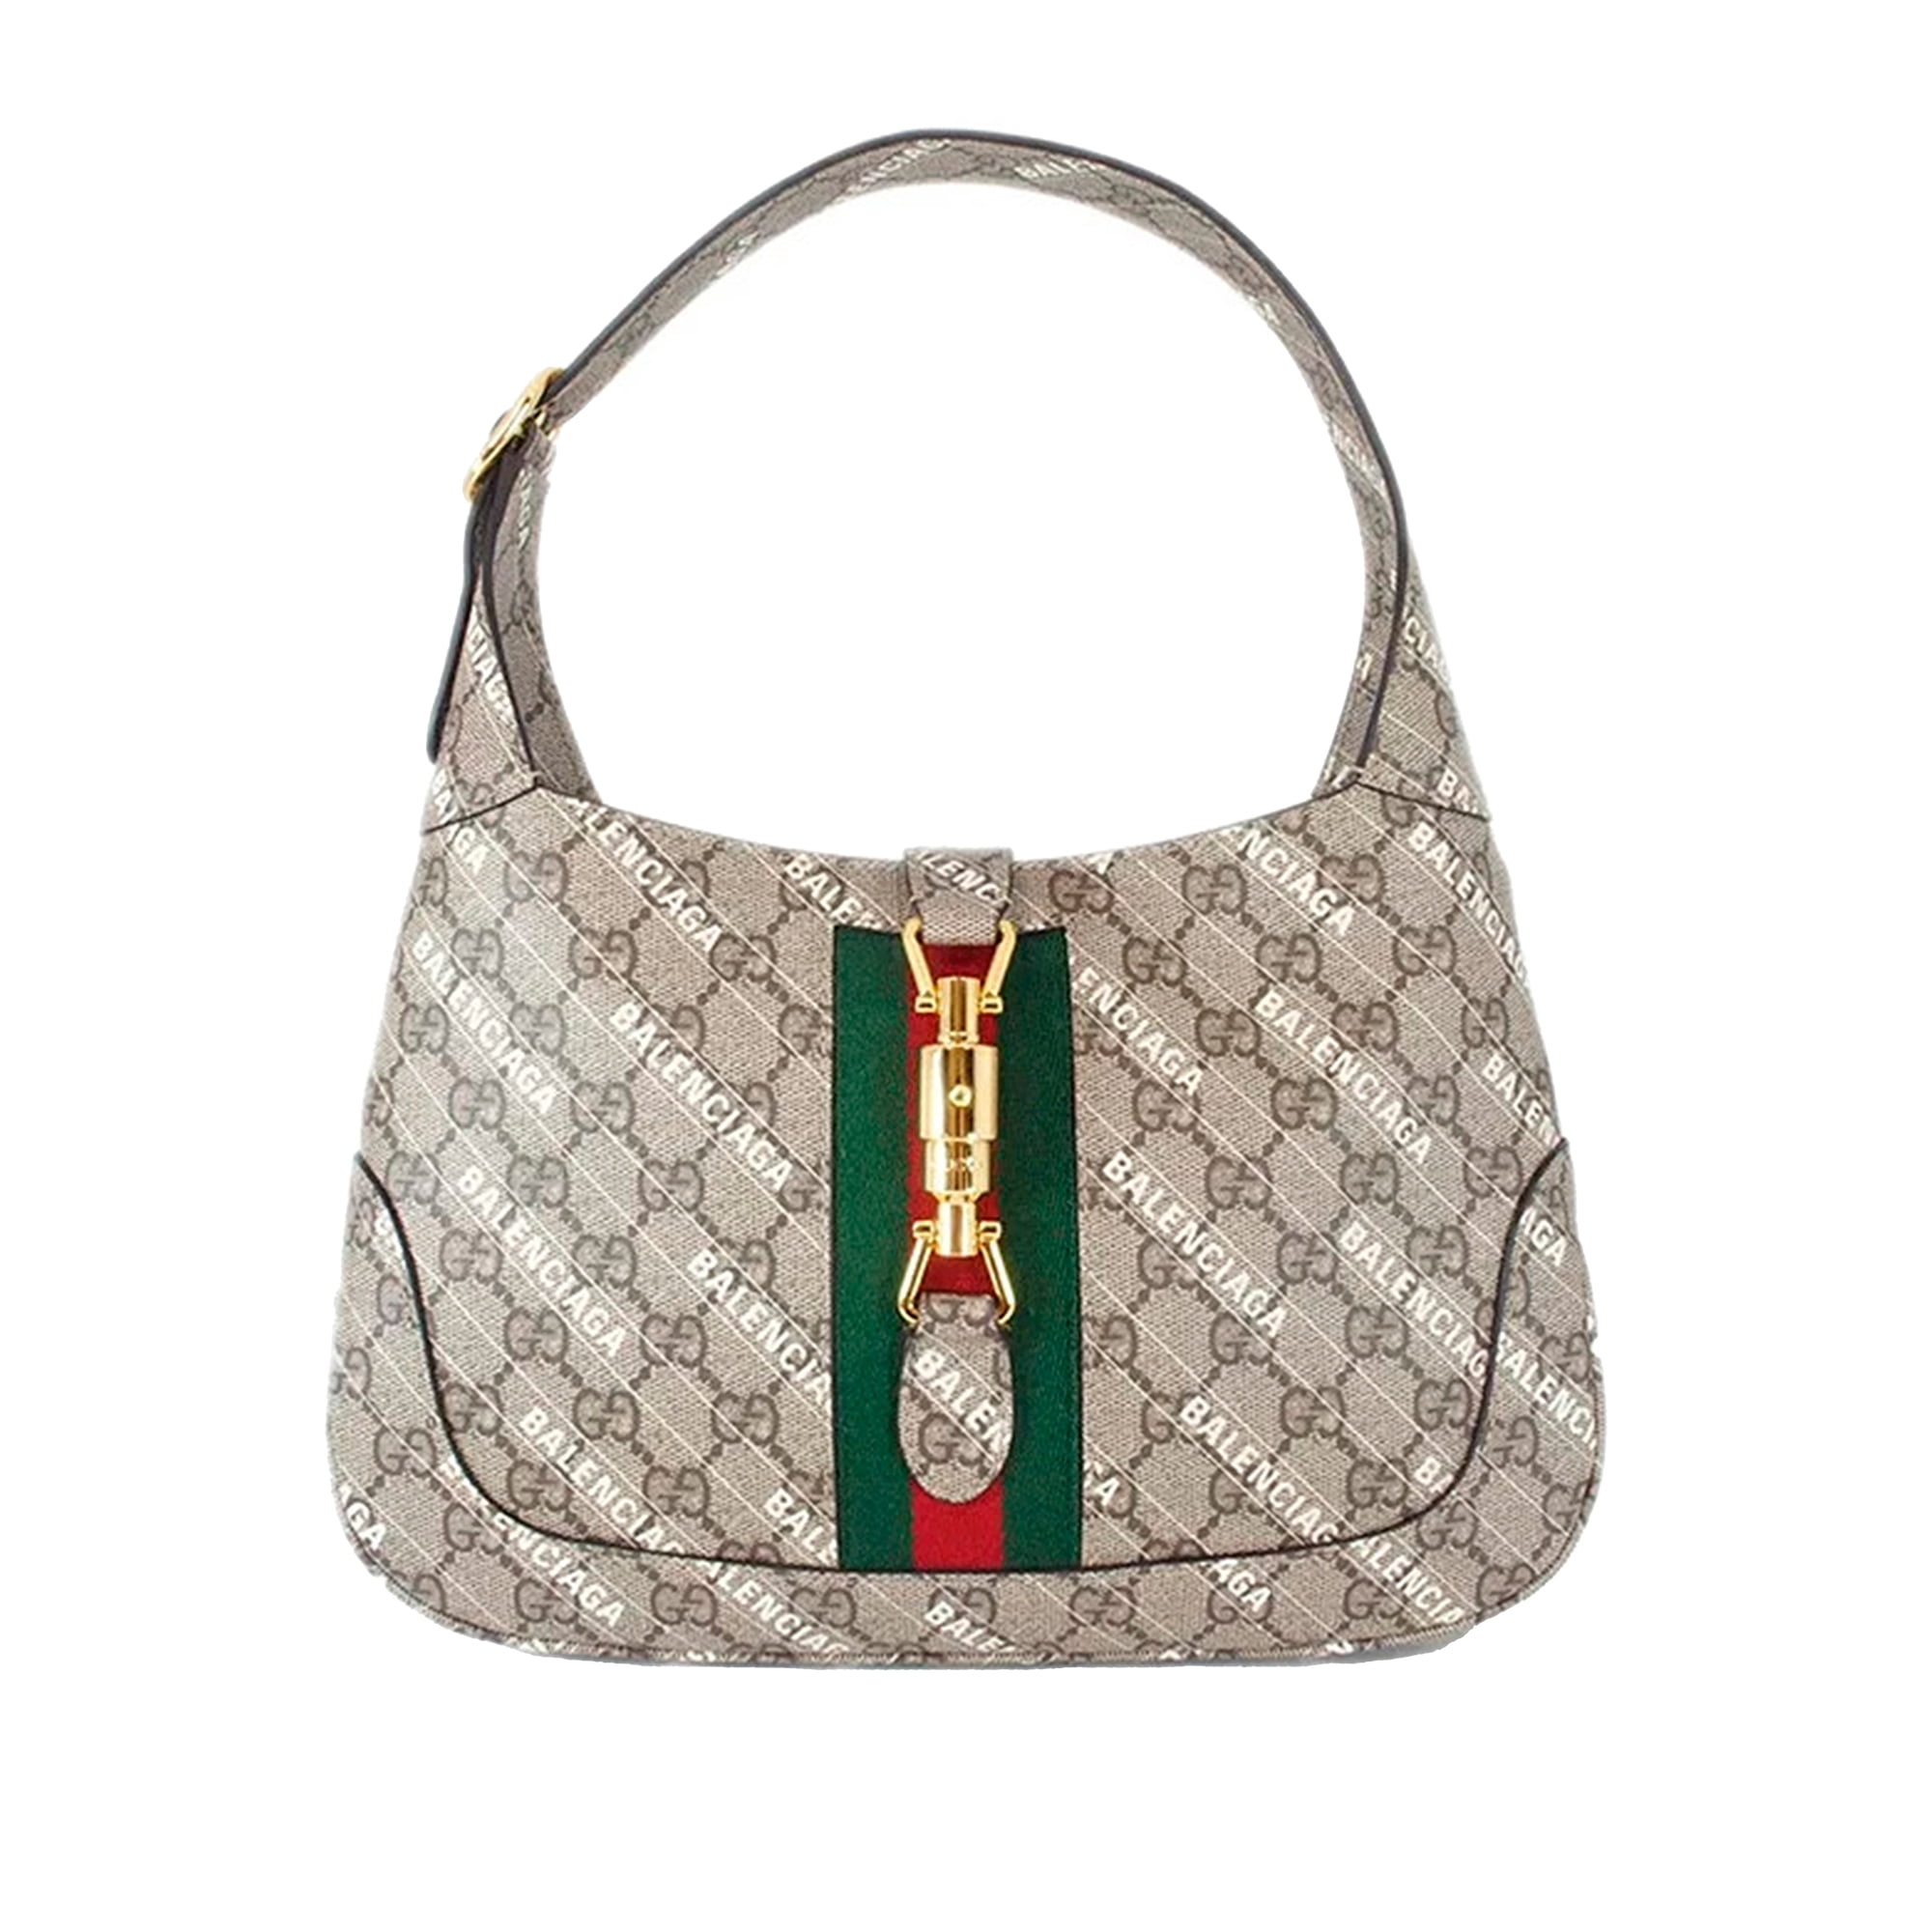 Best Gucci bags - including Horsebit 1955 & Jackie 1961